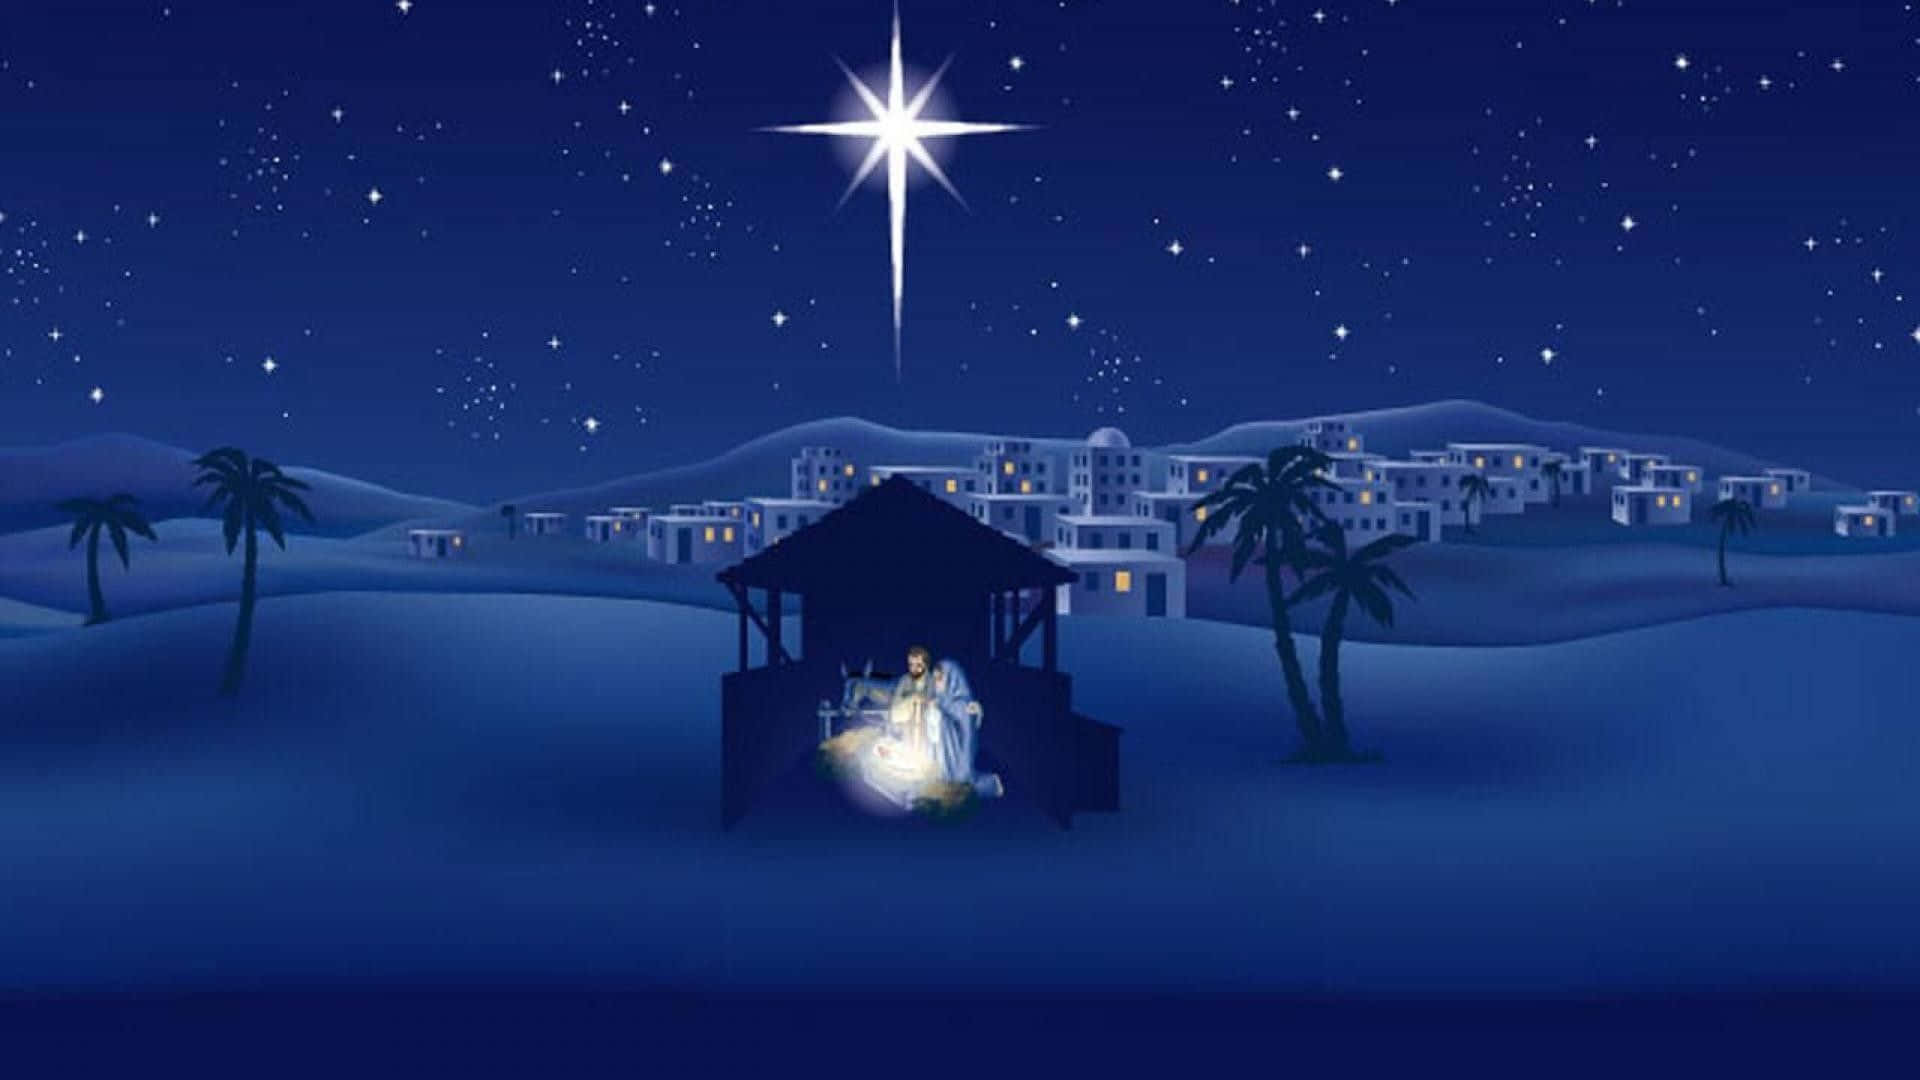 A Beautiful Nativity Scene